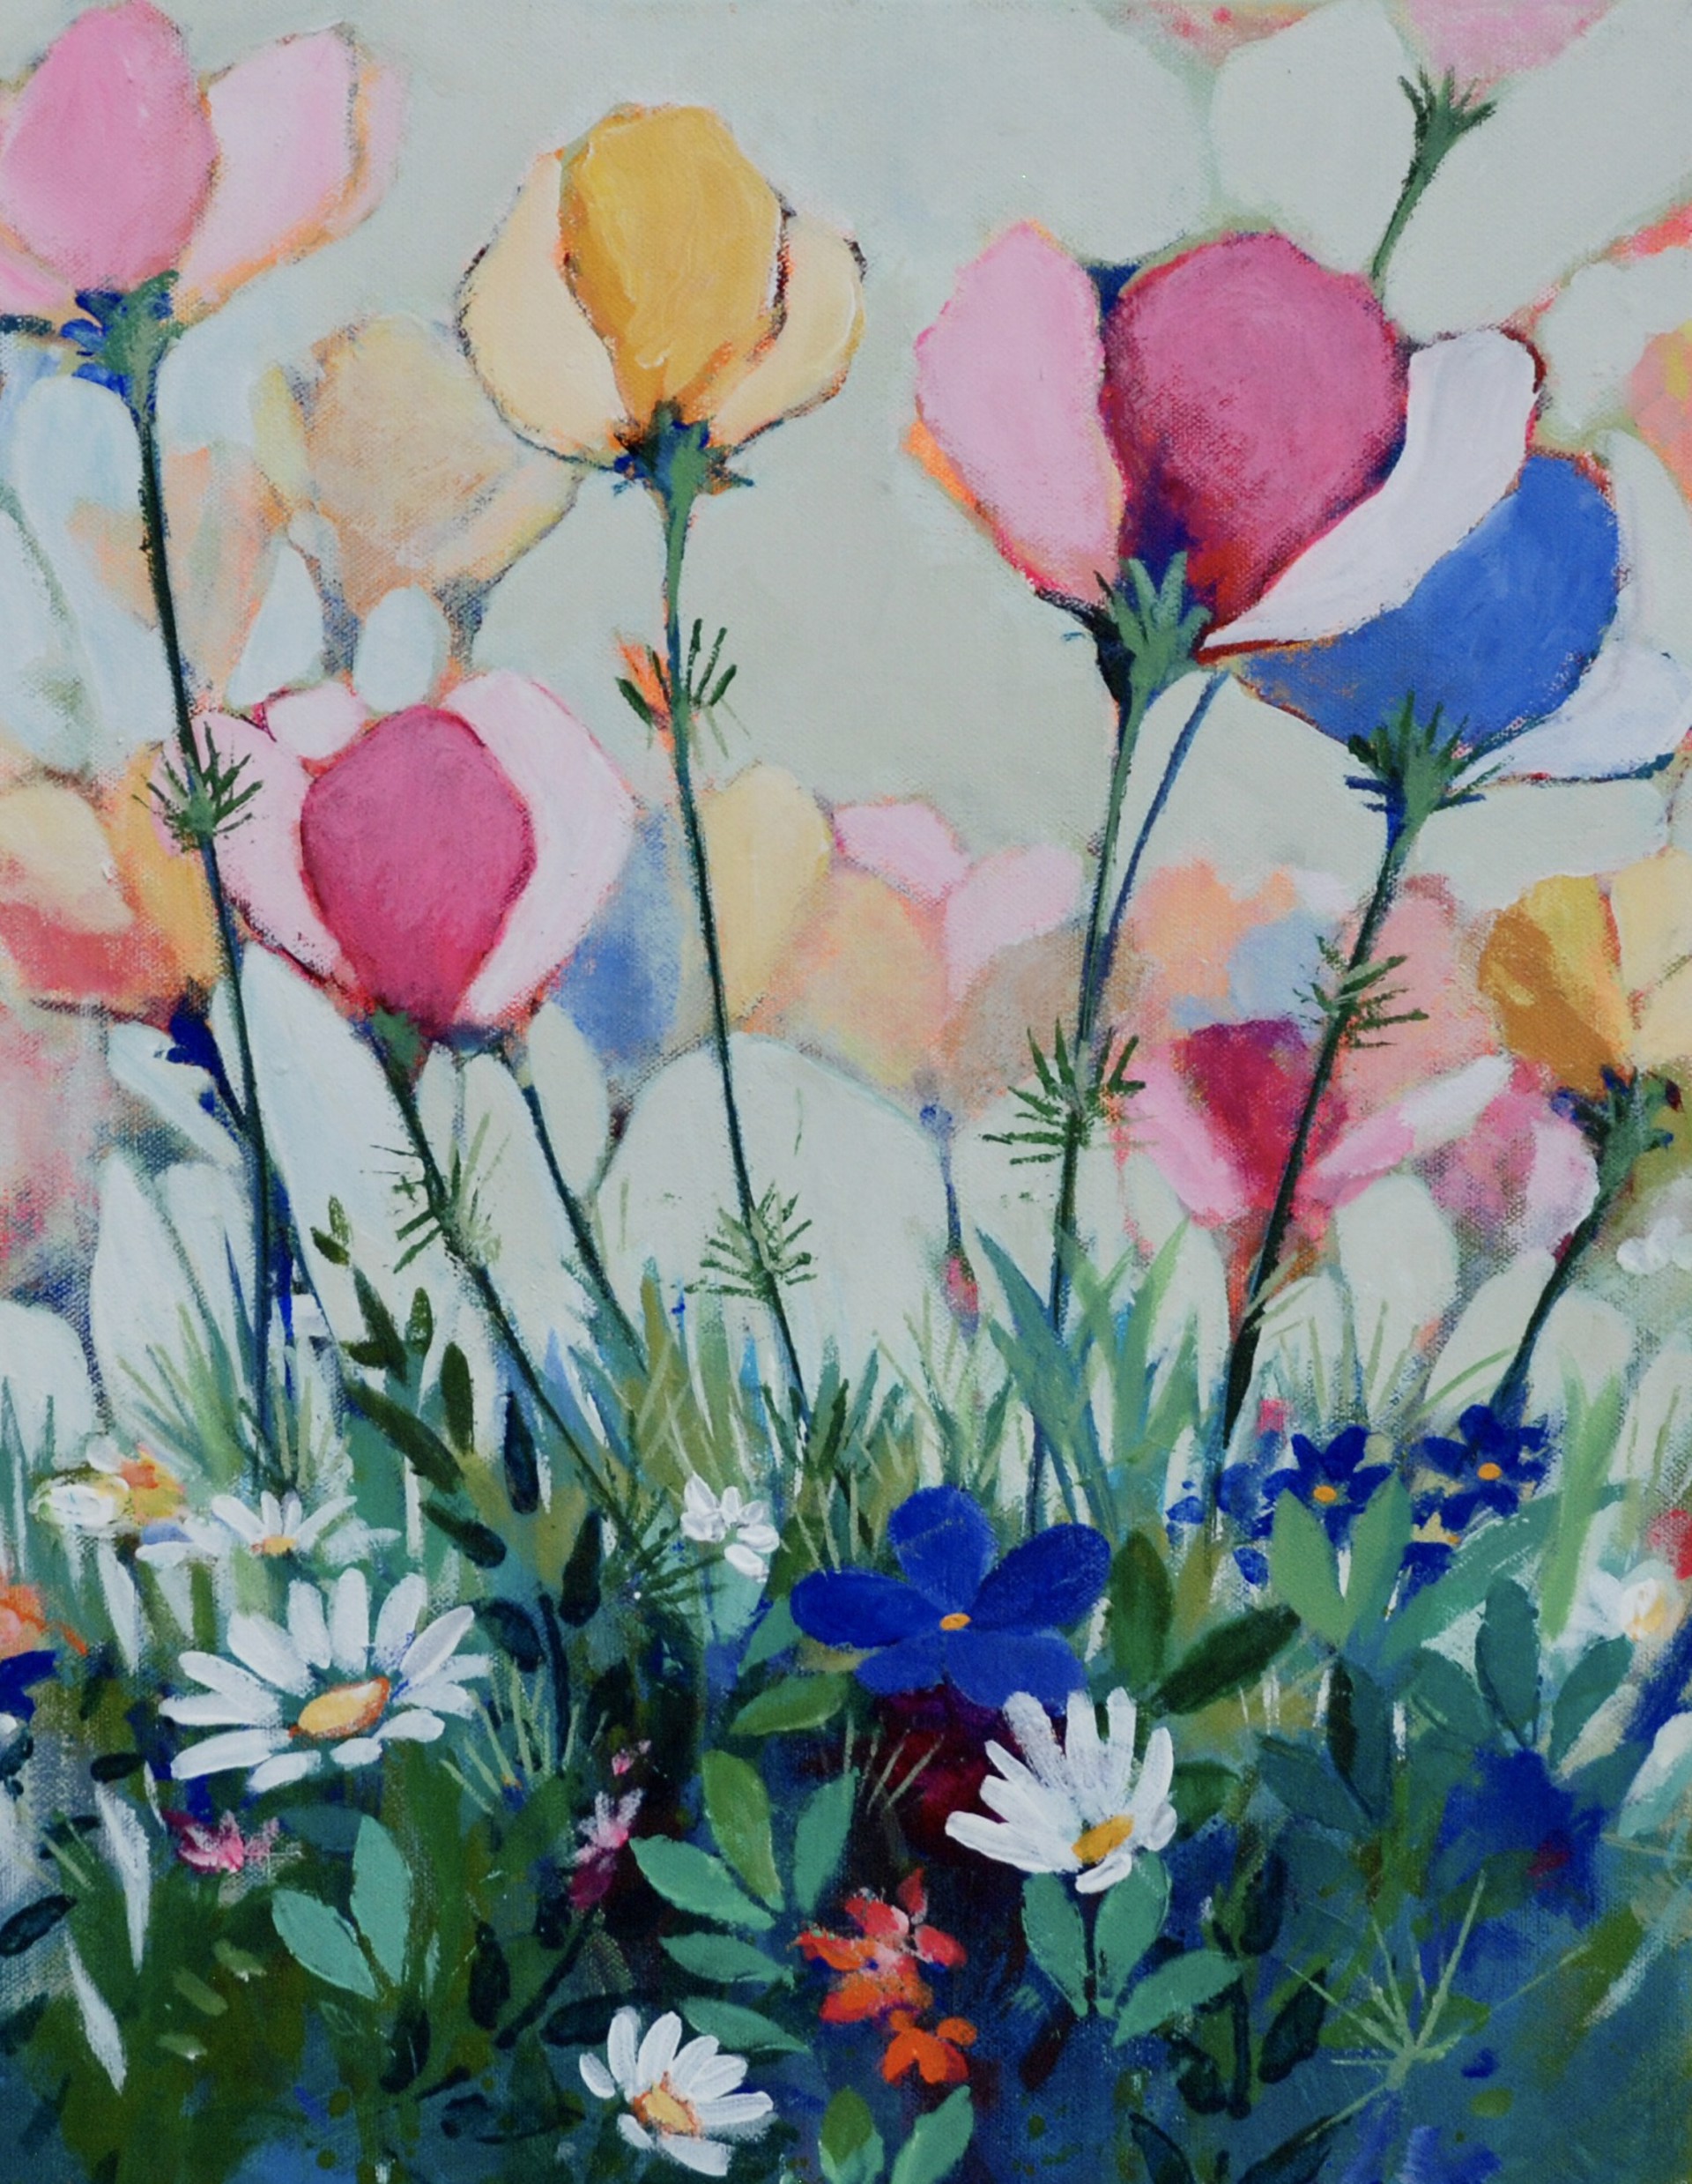 Flower Commission by Susan Easton Burns